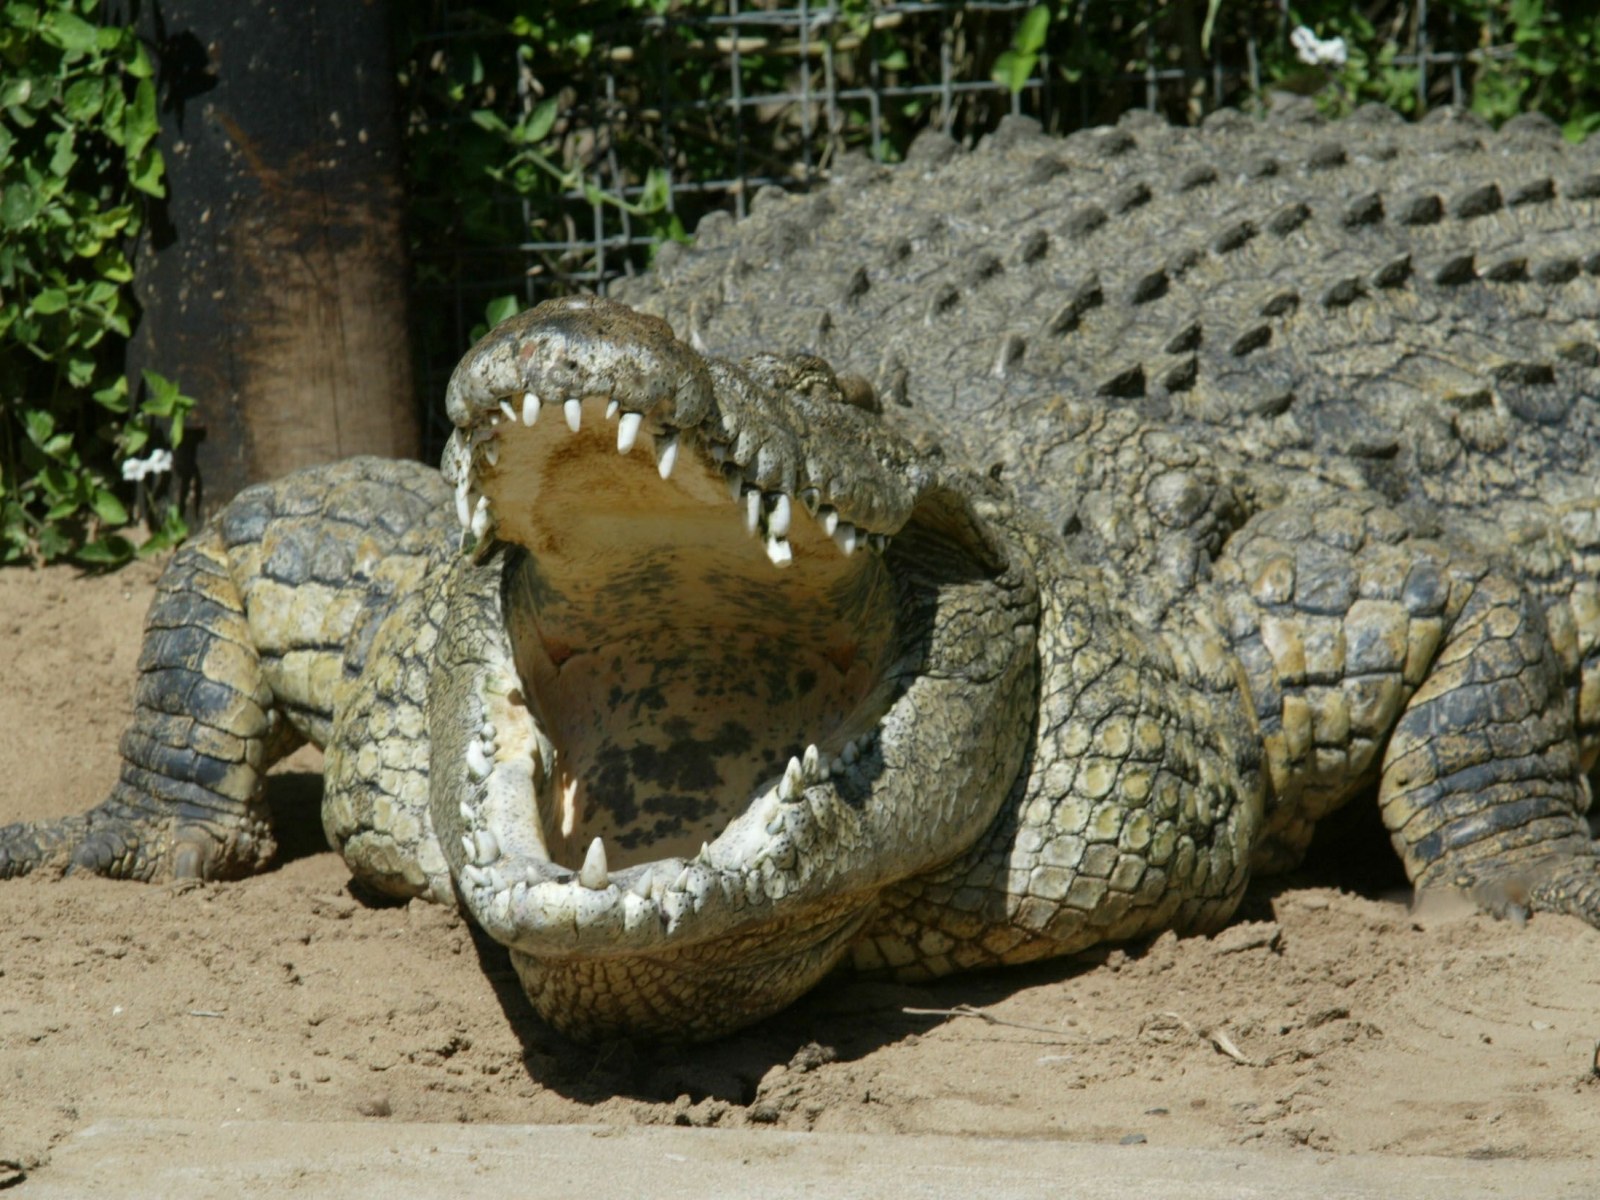 05-25-nile-crocodile-florida.jpg